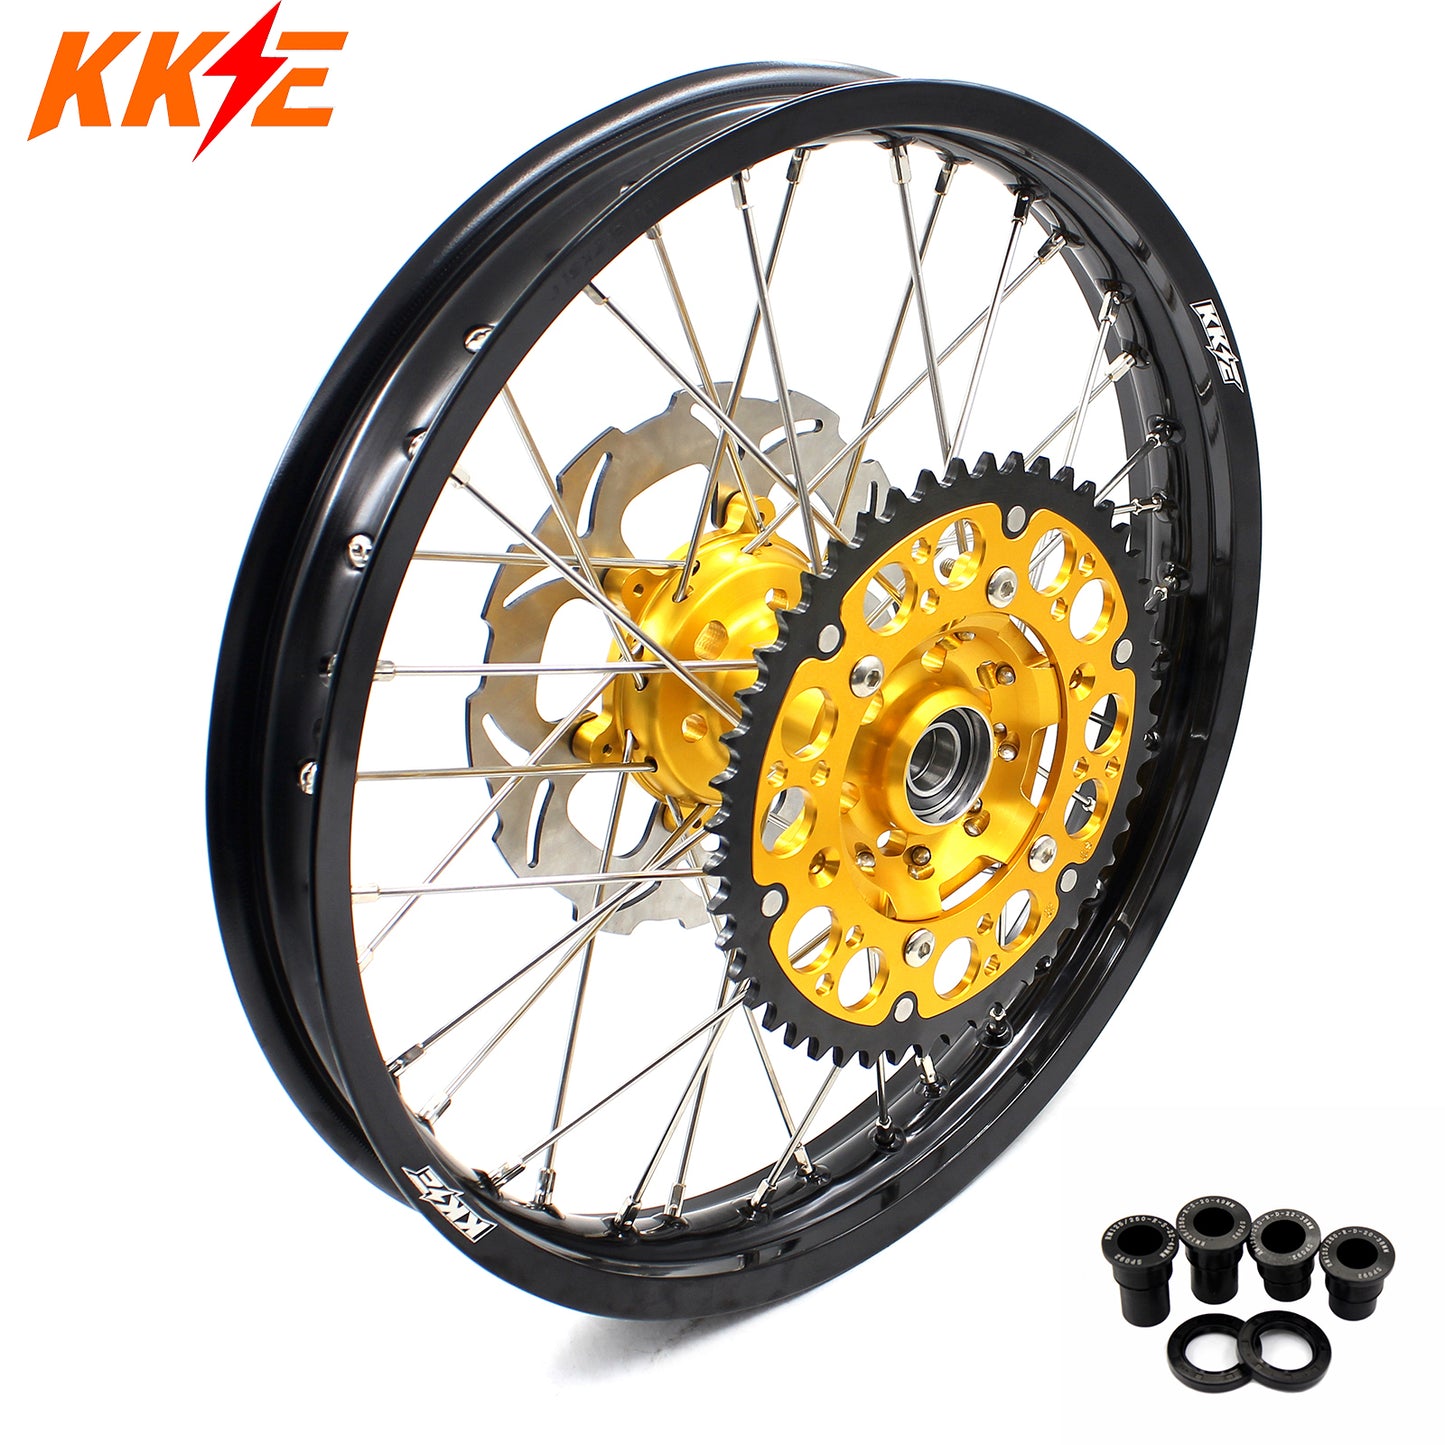 KKE 19"×2.15 Rear Wheel Rim Fit For SUZUKI RM125 RM250 1996-2000